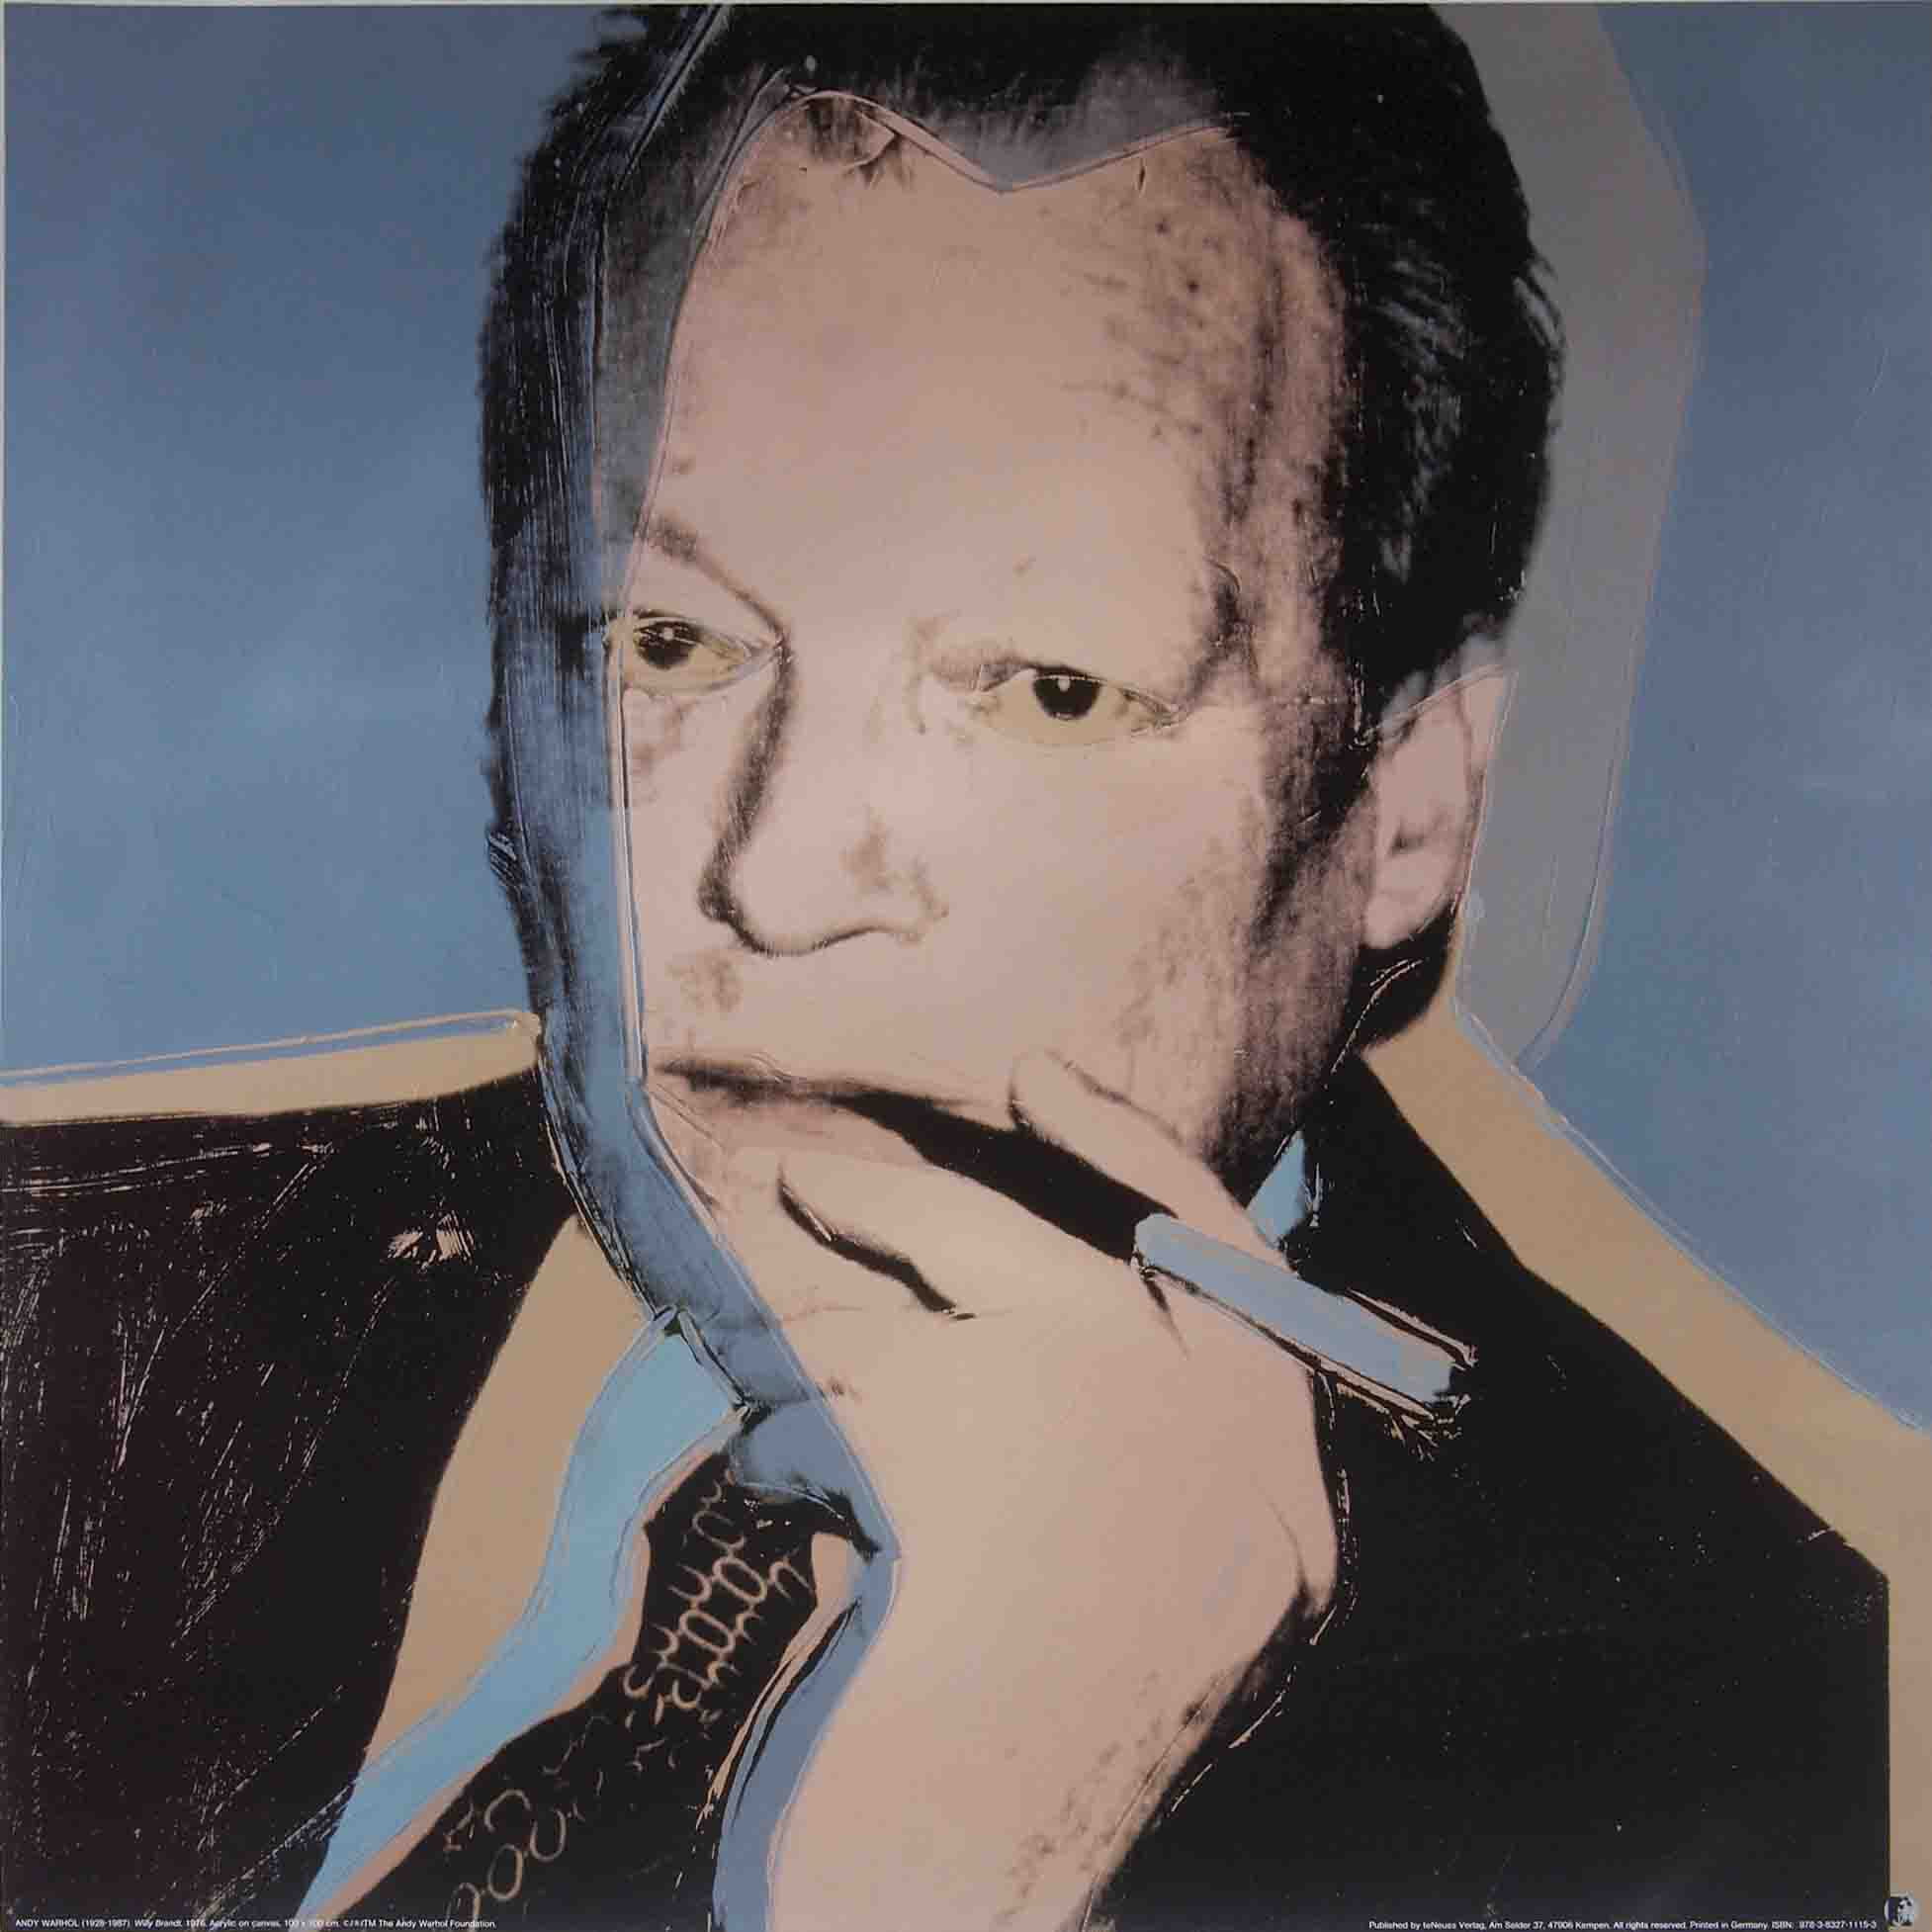 ANDY WARHOL Willy Brandt 27.5 x 27.5 Poster 1997 Pop Art Black White, Blue  Man, Smoking, Portrait, Celebrities, Musicians 